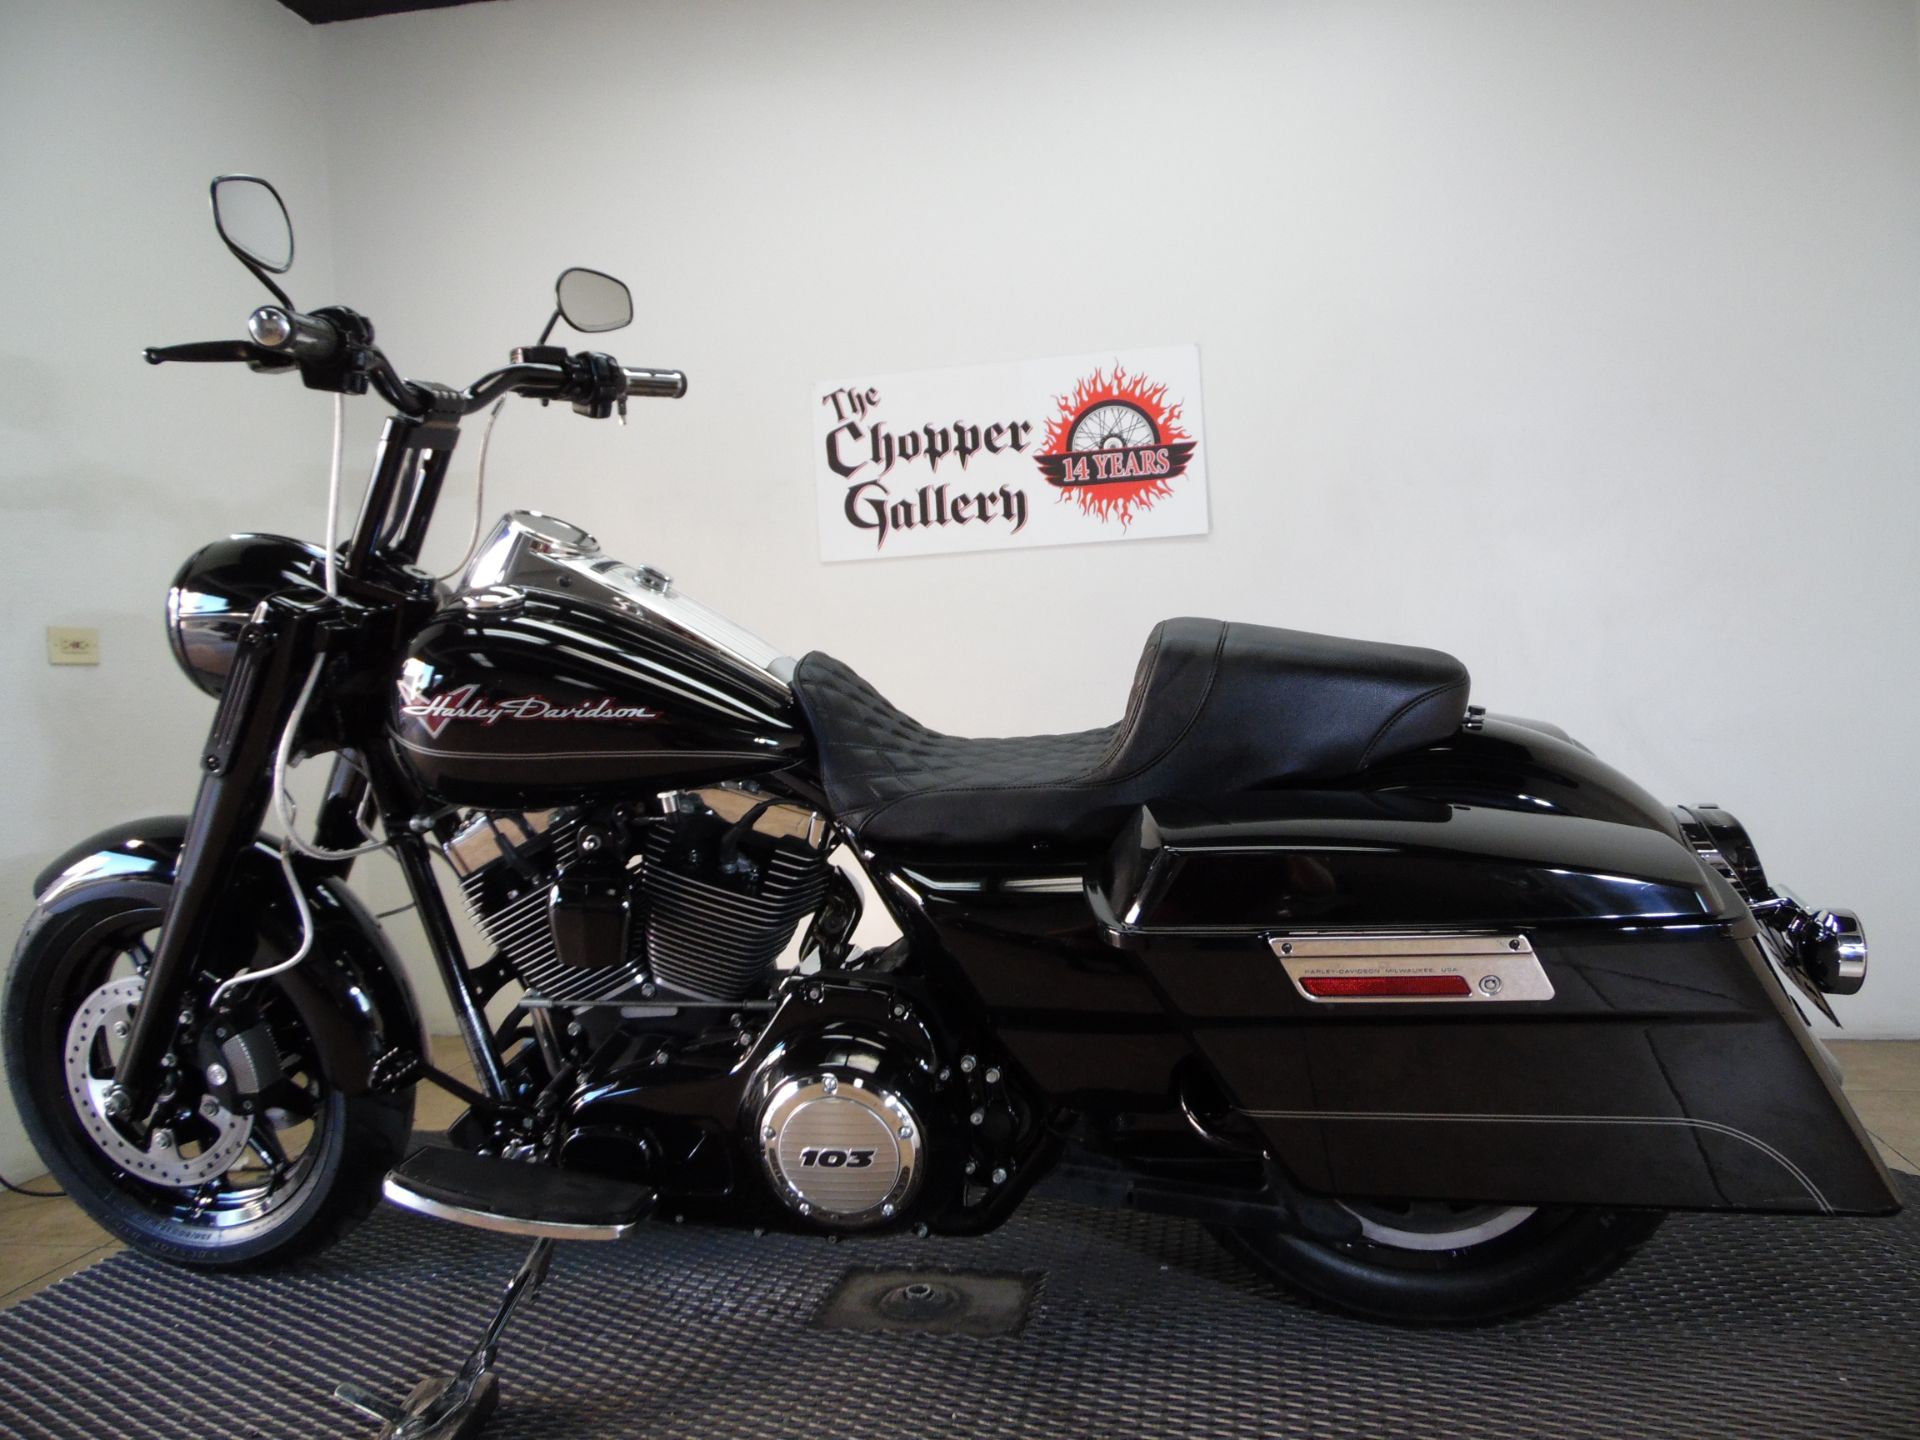 2013 Harley-Davidson Road King® in Temecula, California - Photo 12